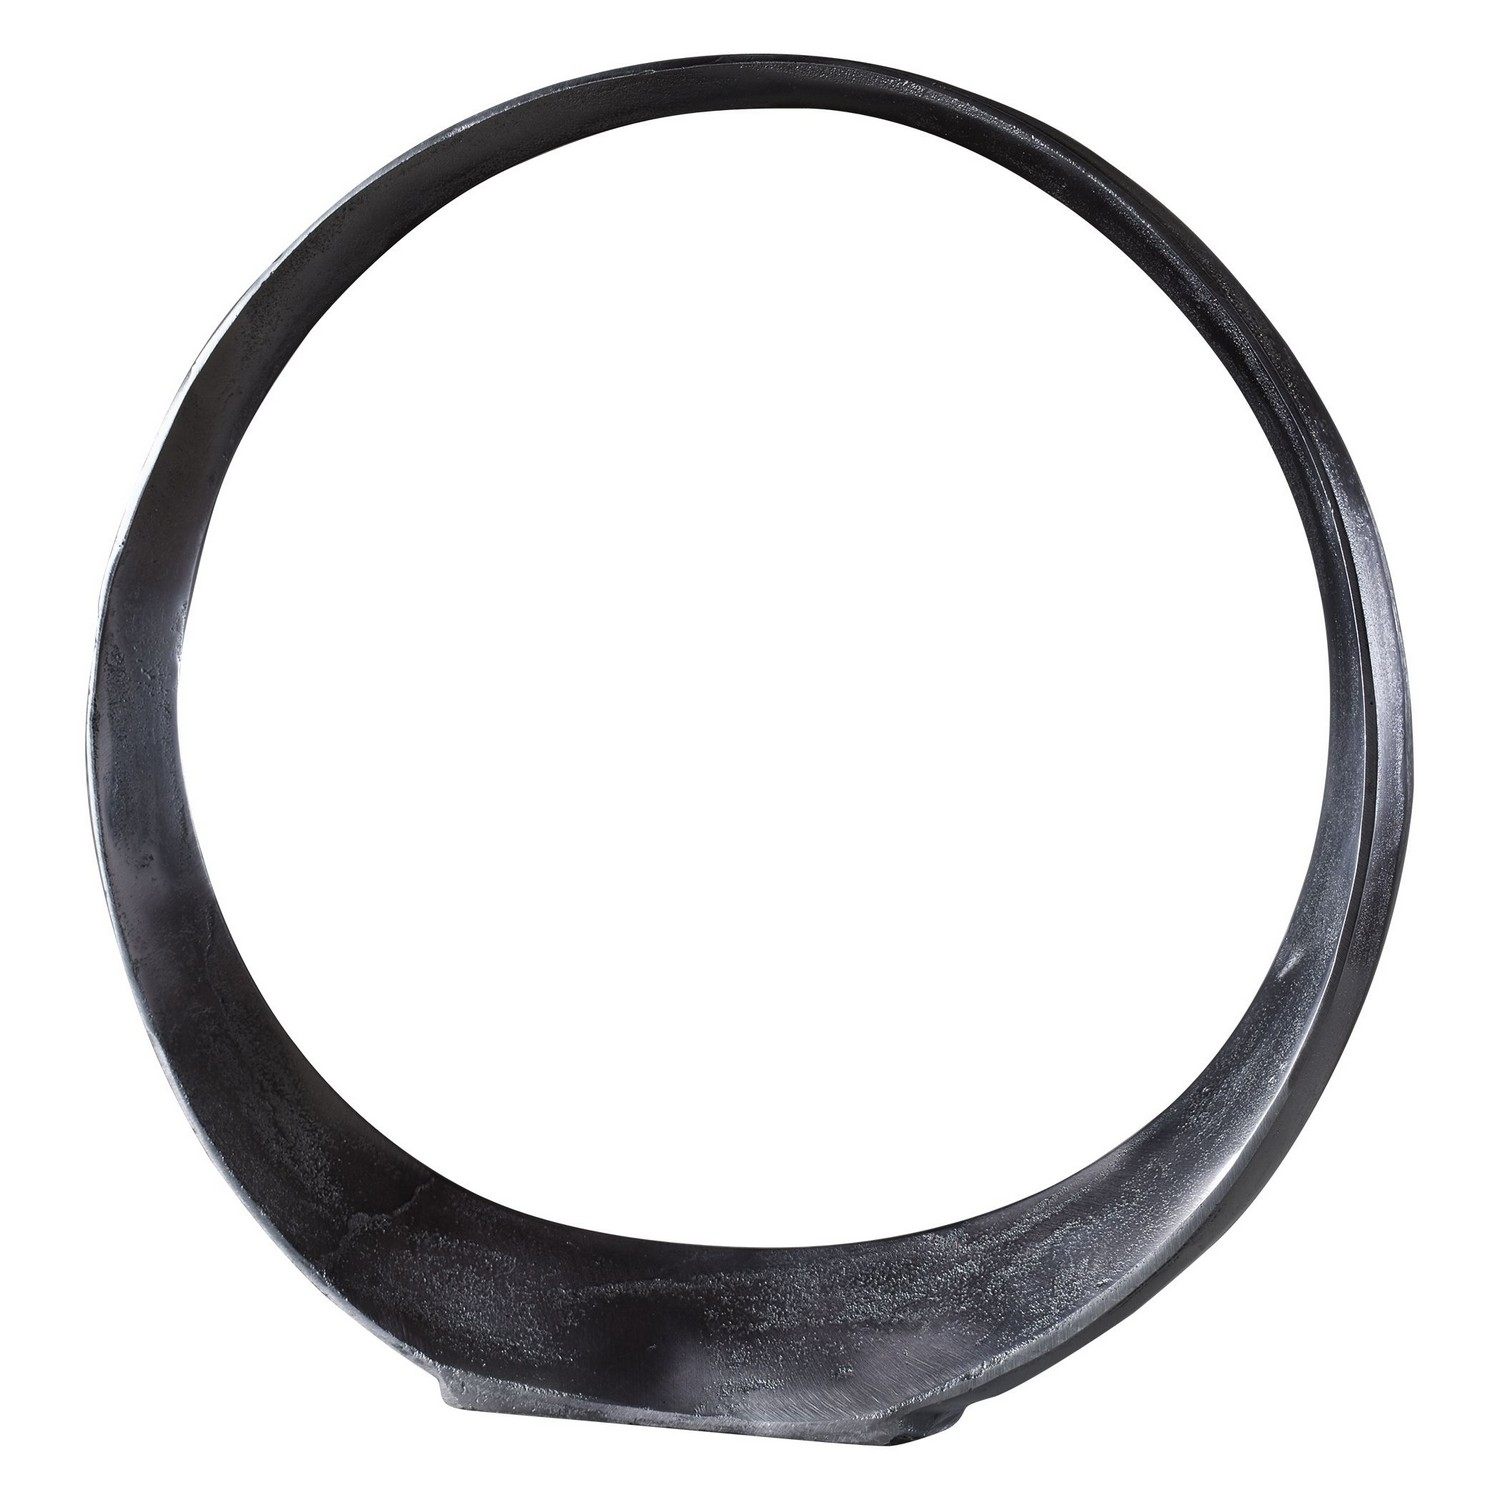 Uttermost Orbits Nickel Large Ring Sculpture - Black